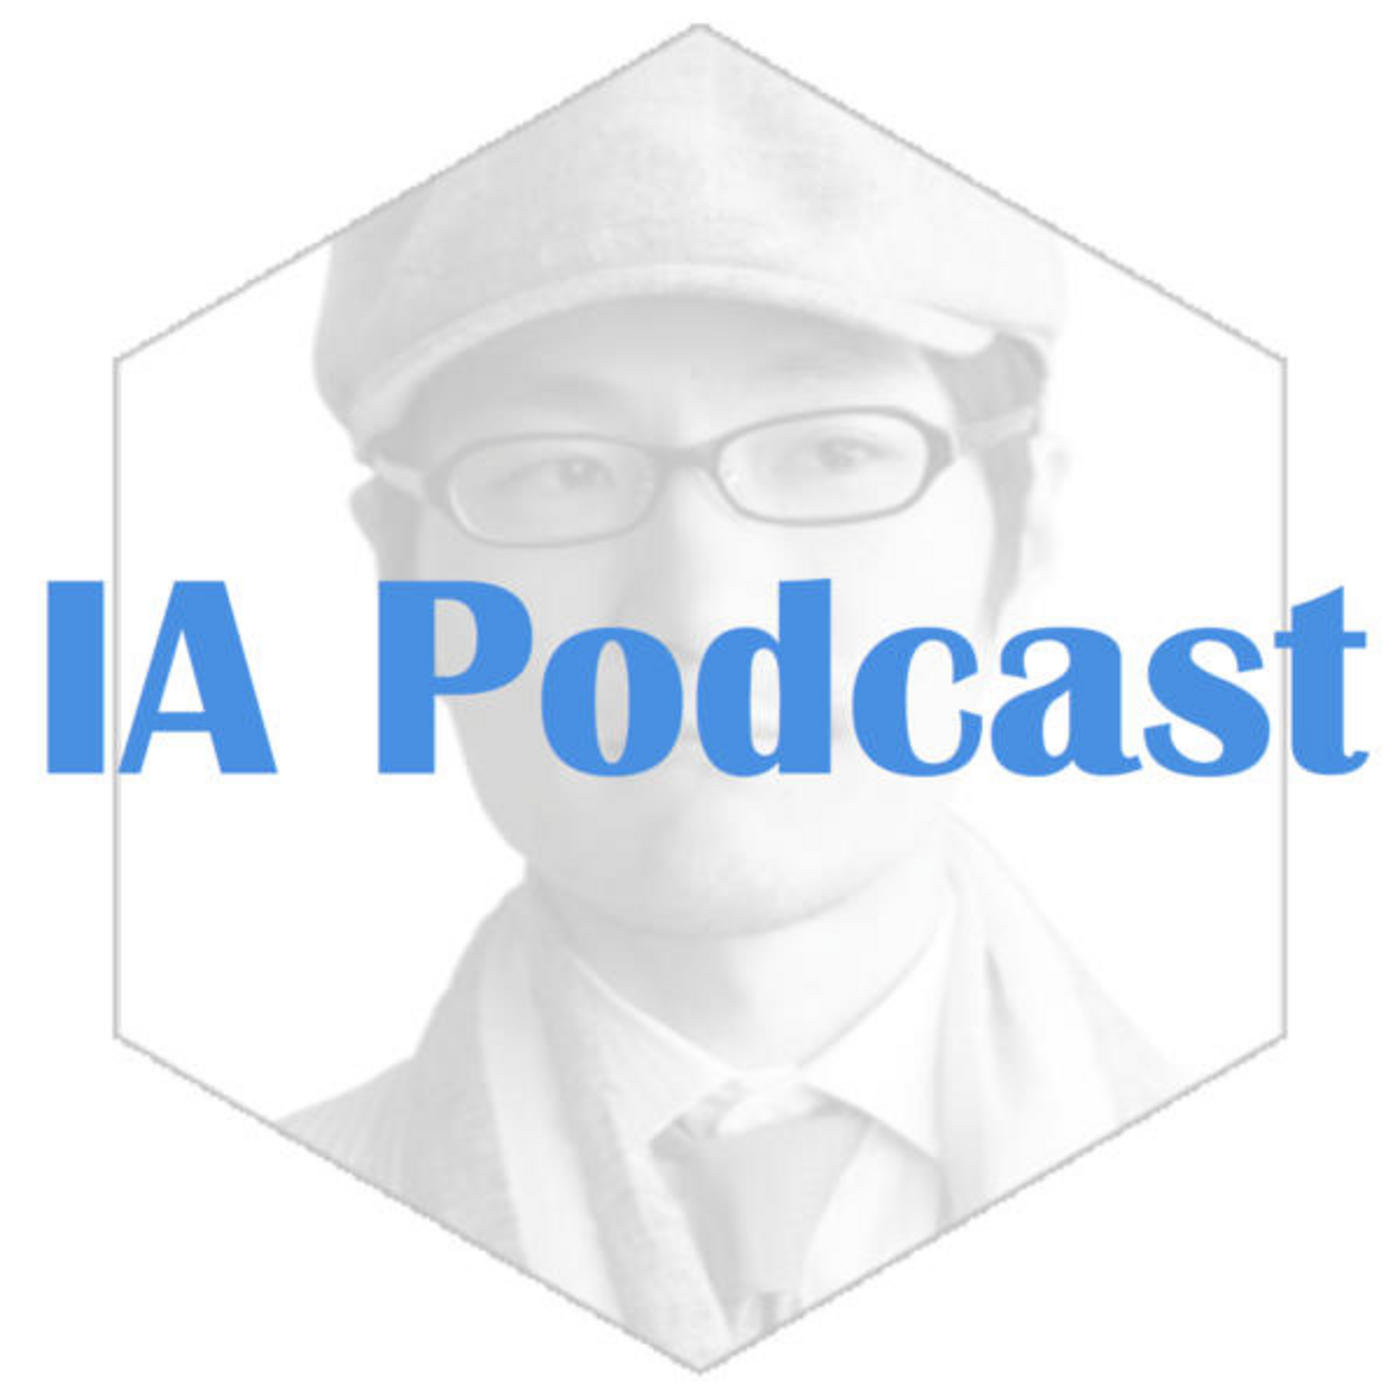 IA Podcast